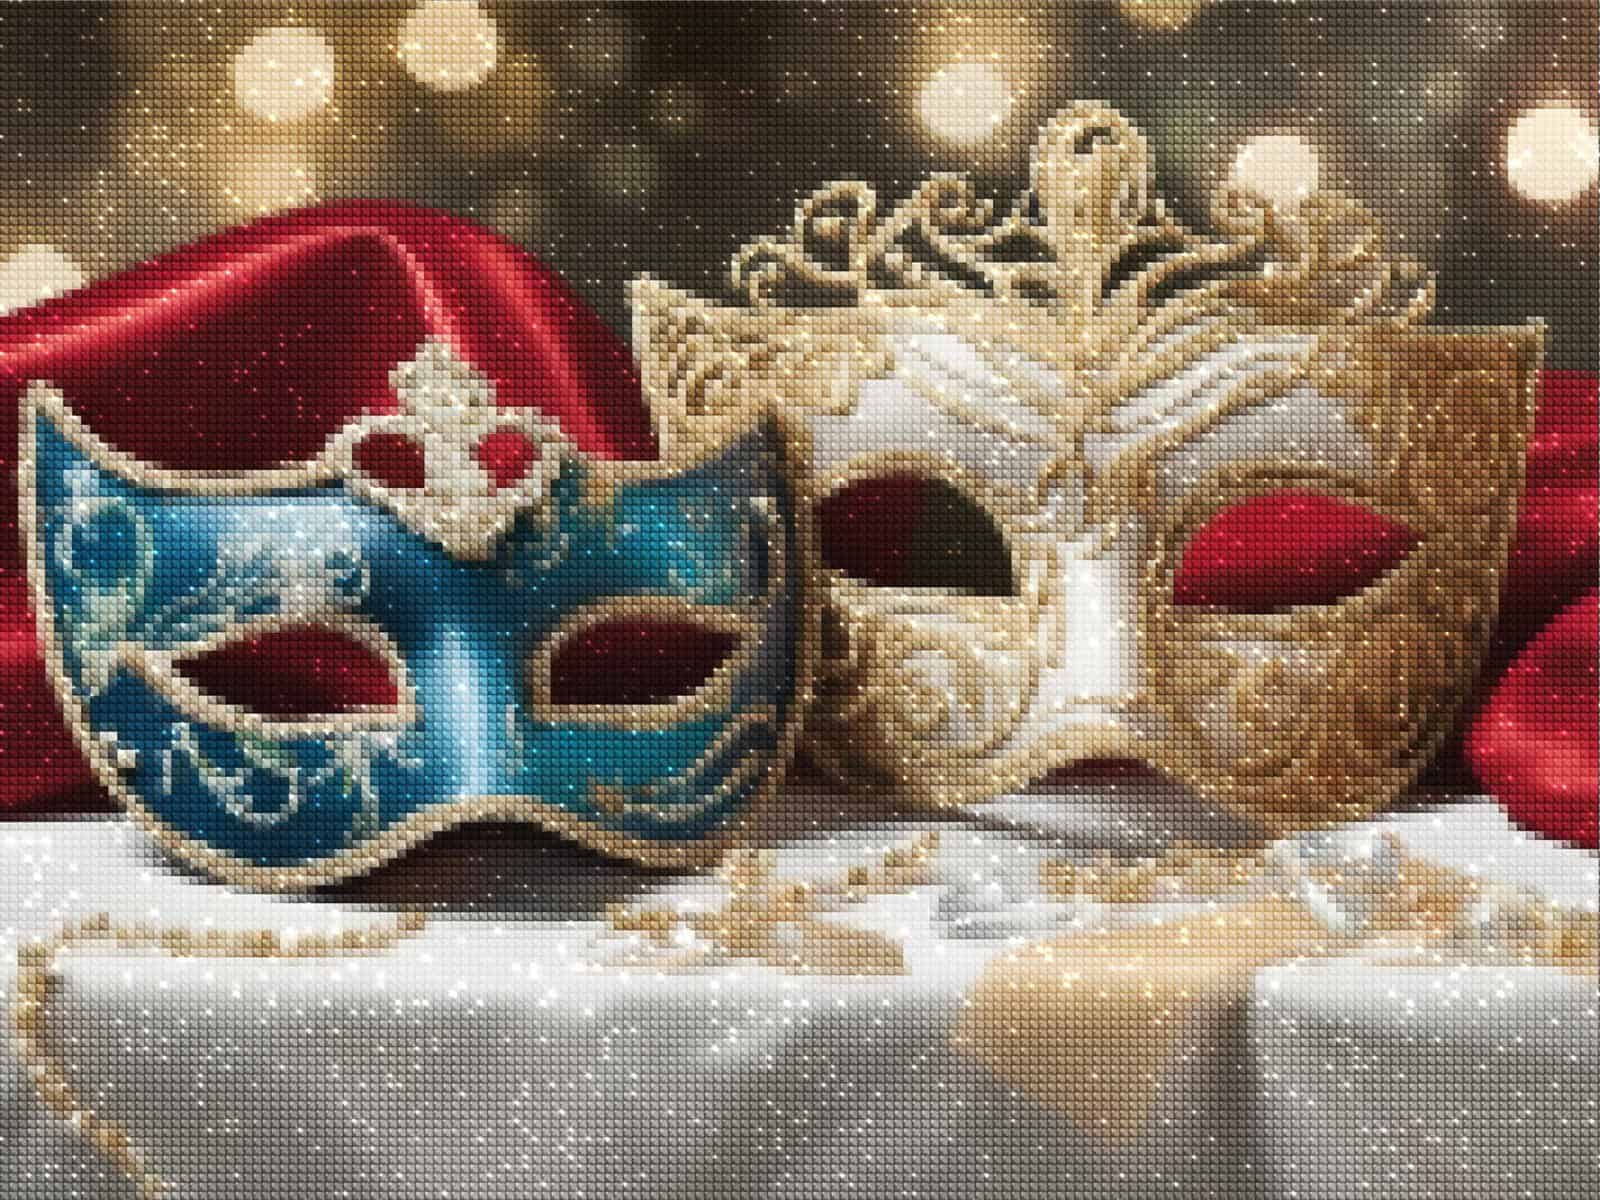 diamantes-mago-kits-de-pintura-de-diamantes-Eventos-Año Nuevo-Festivo-Baile-de-mascaras-diamantes.jpg